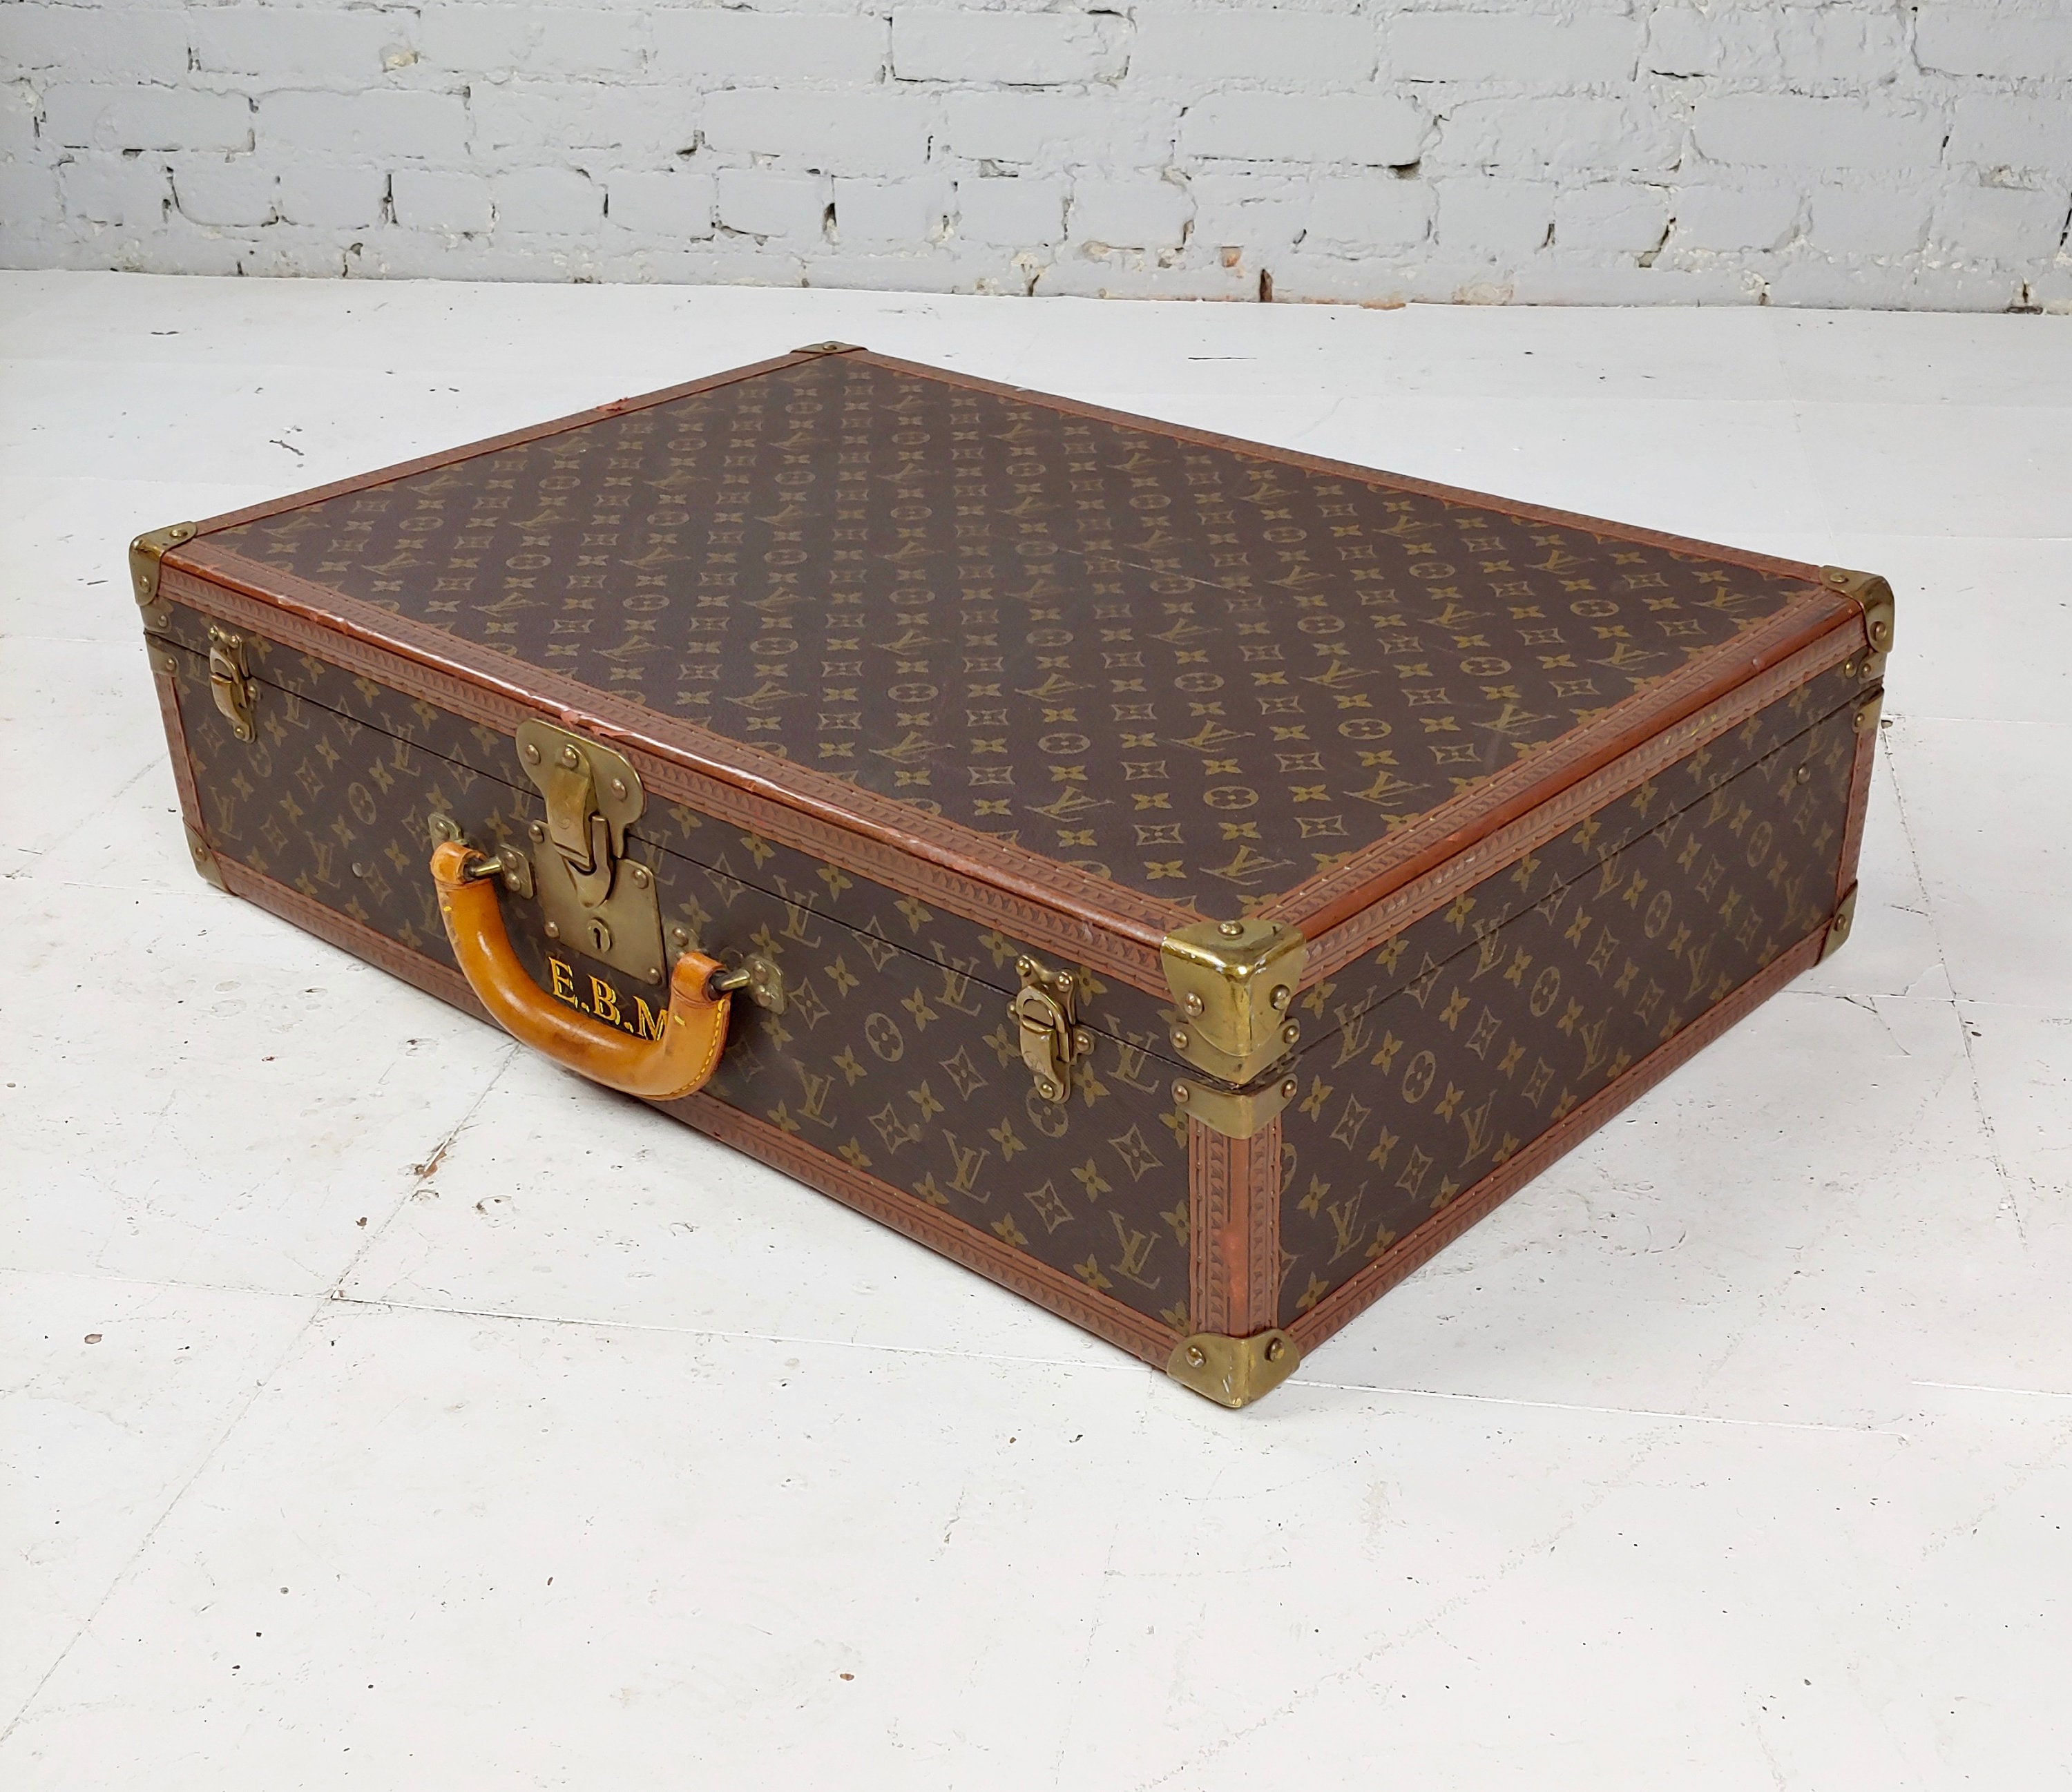 File:Berlin- Louis Vuitton luggage suitcase set - 4360.jpg